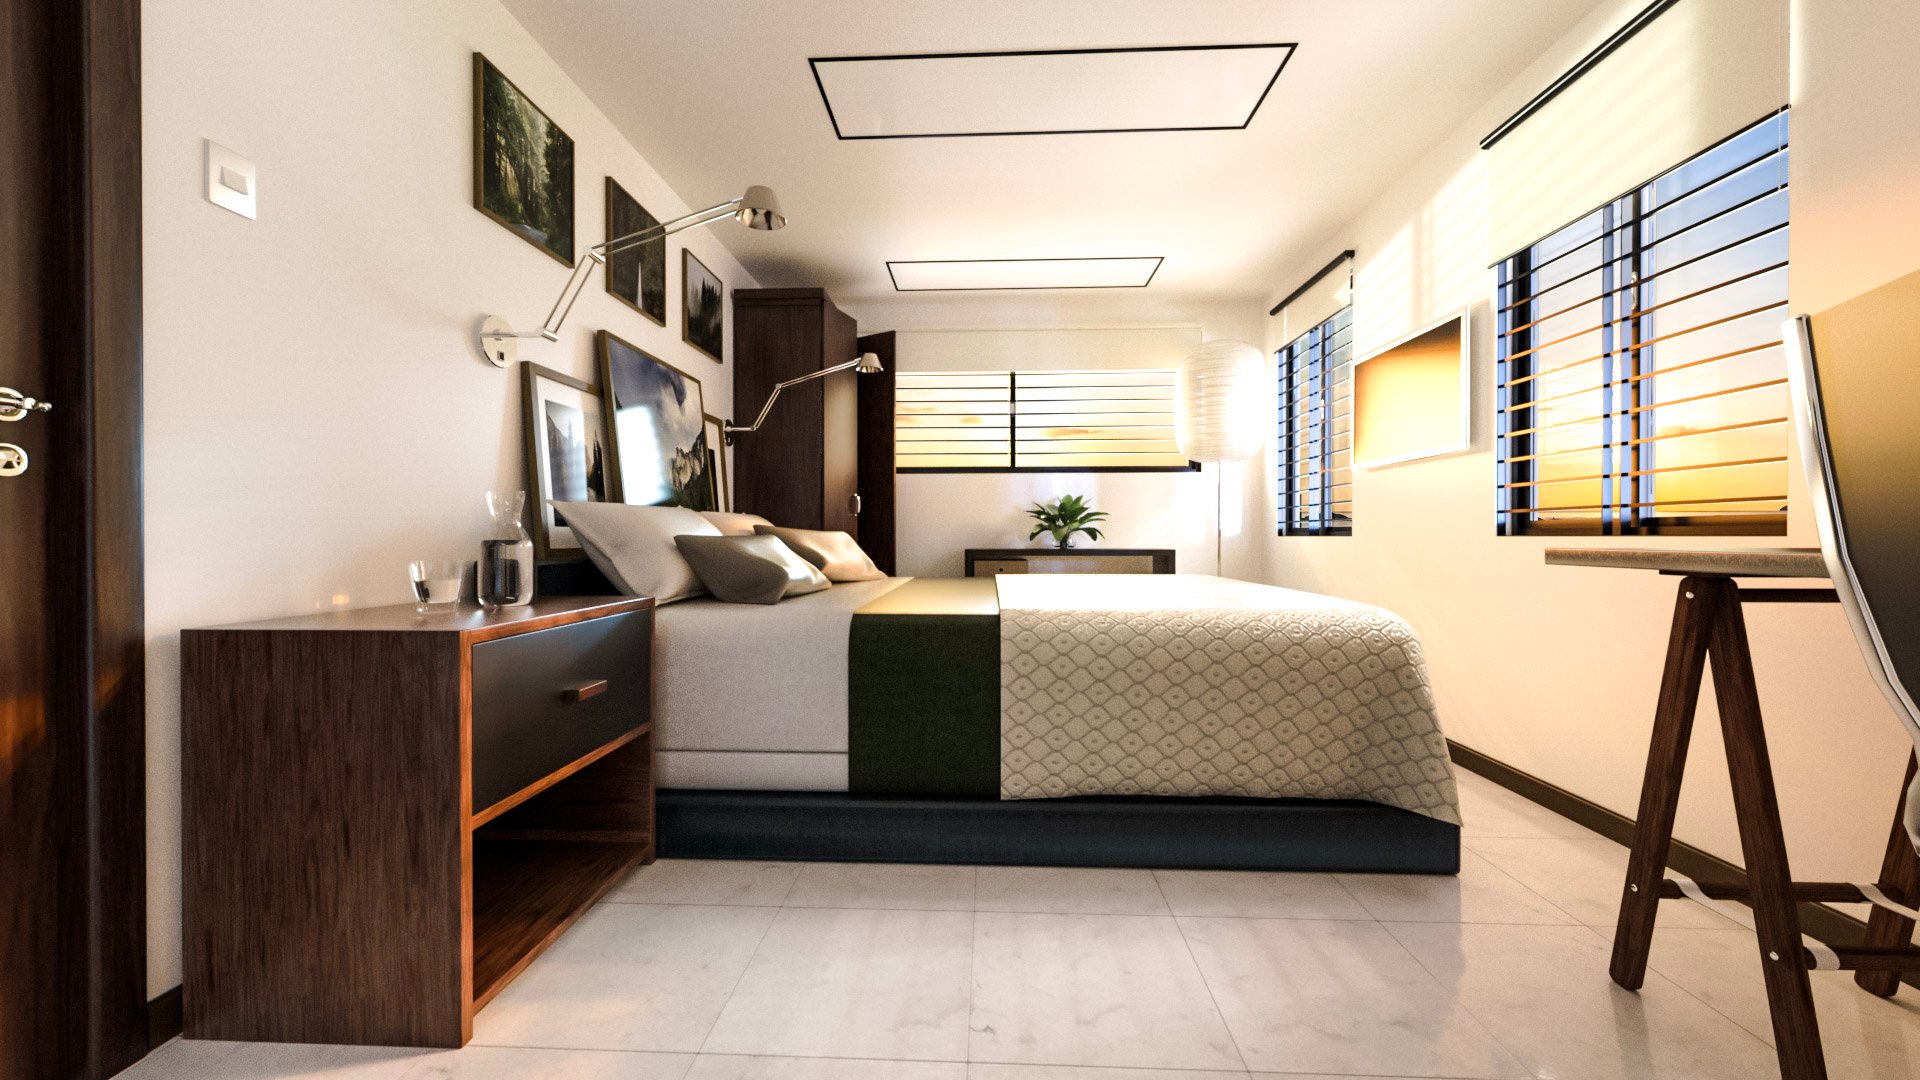 Avil Guest Room by: Tesla3dCorp, 3D Models by Daz 3D